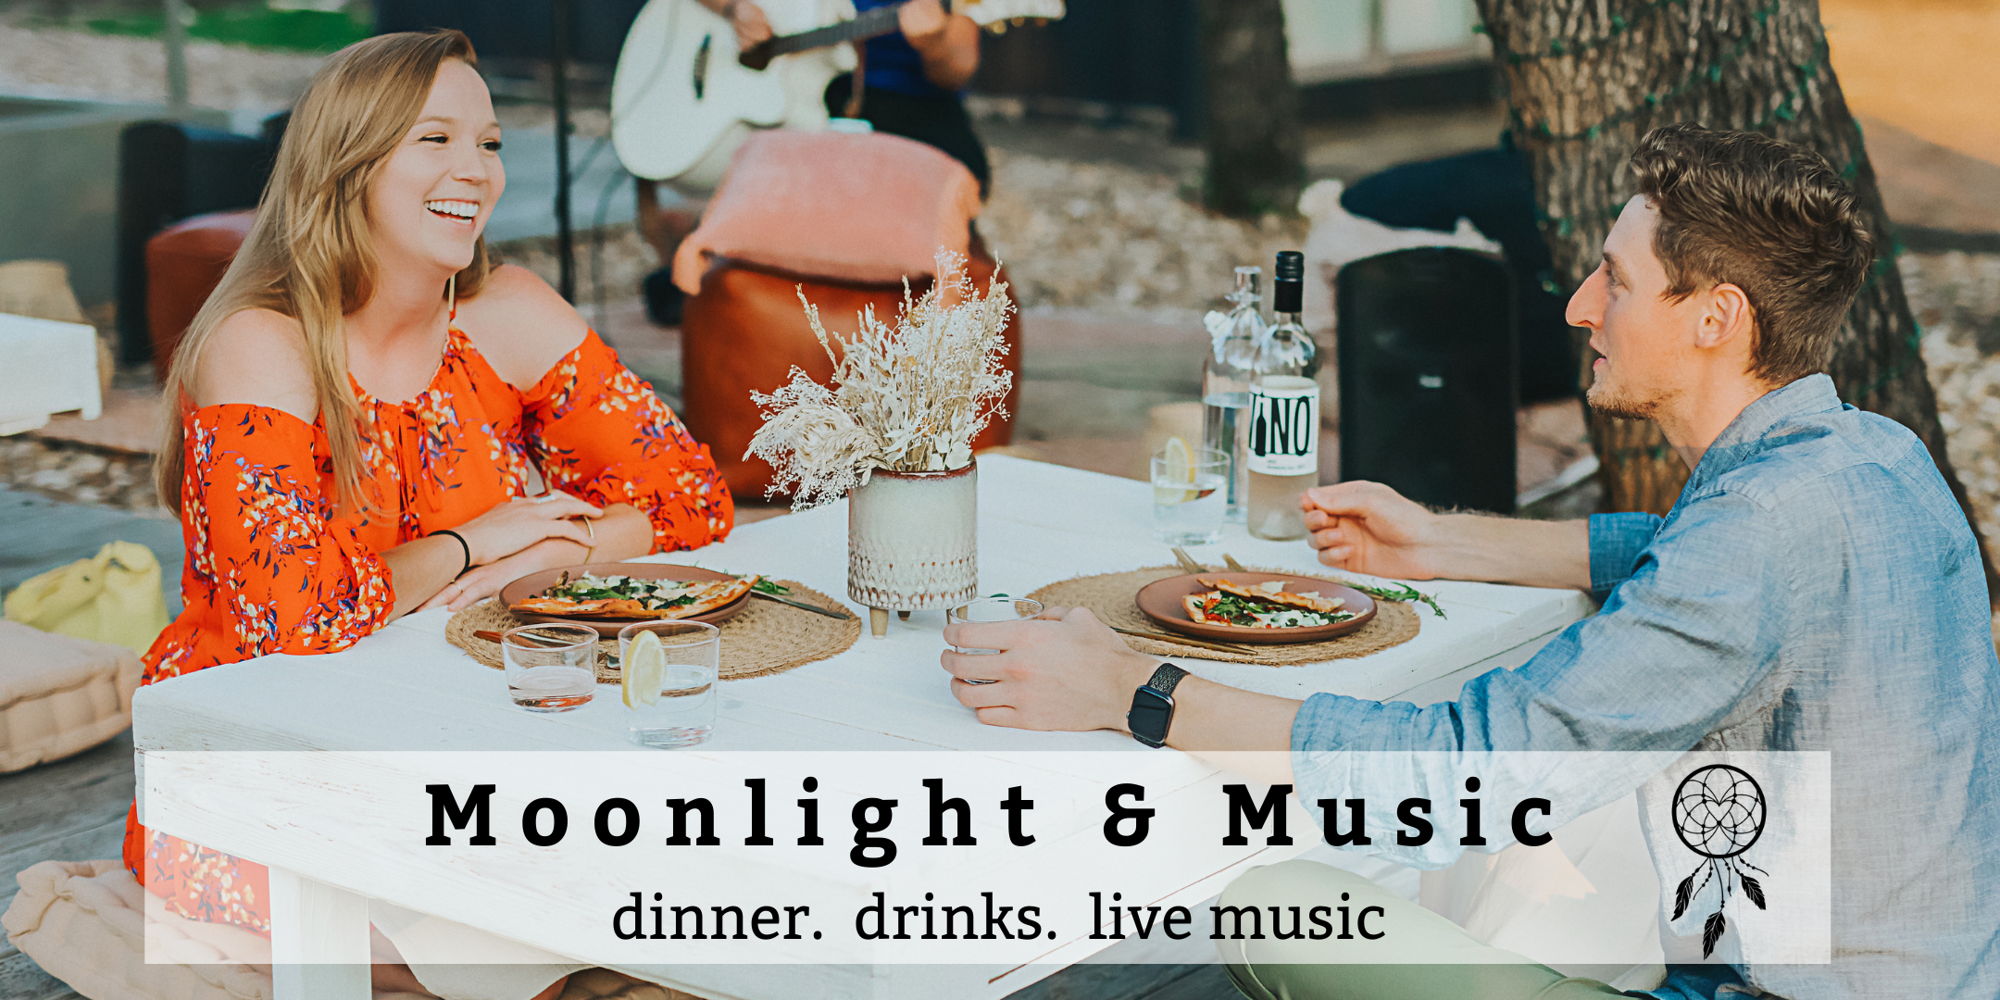 Moonlight & Music promotional image